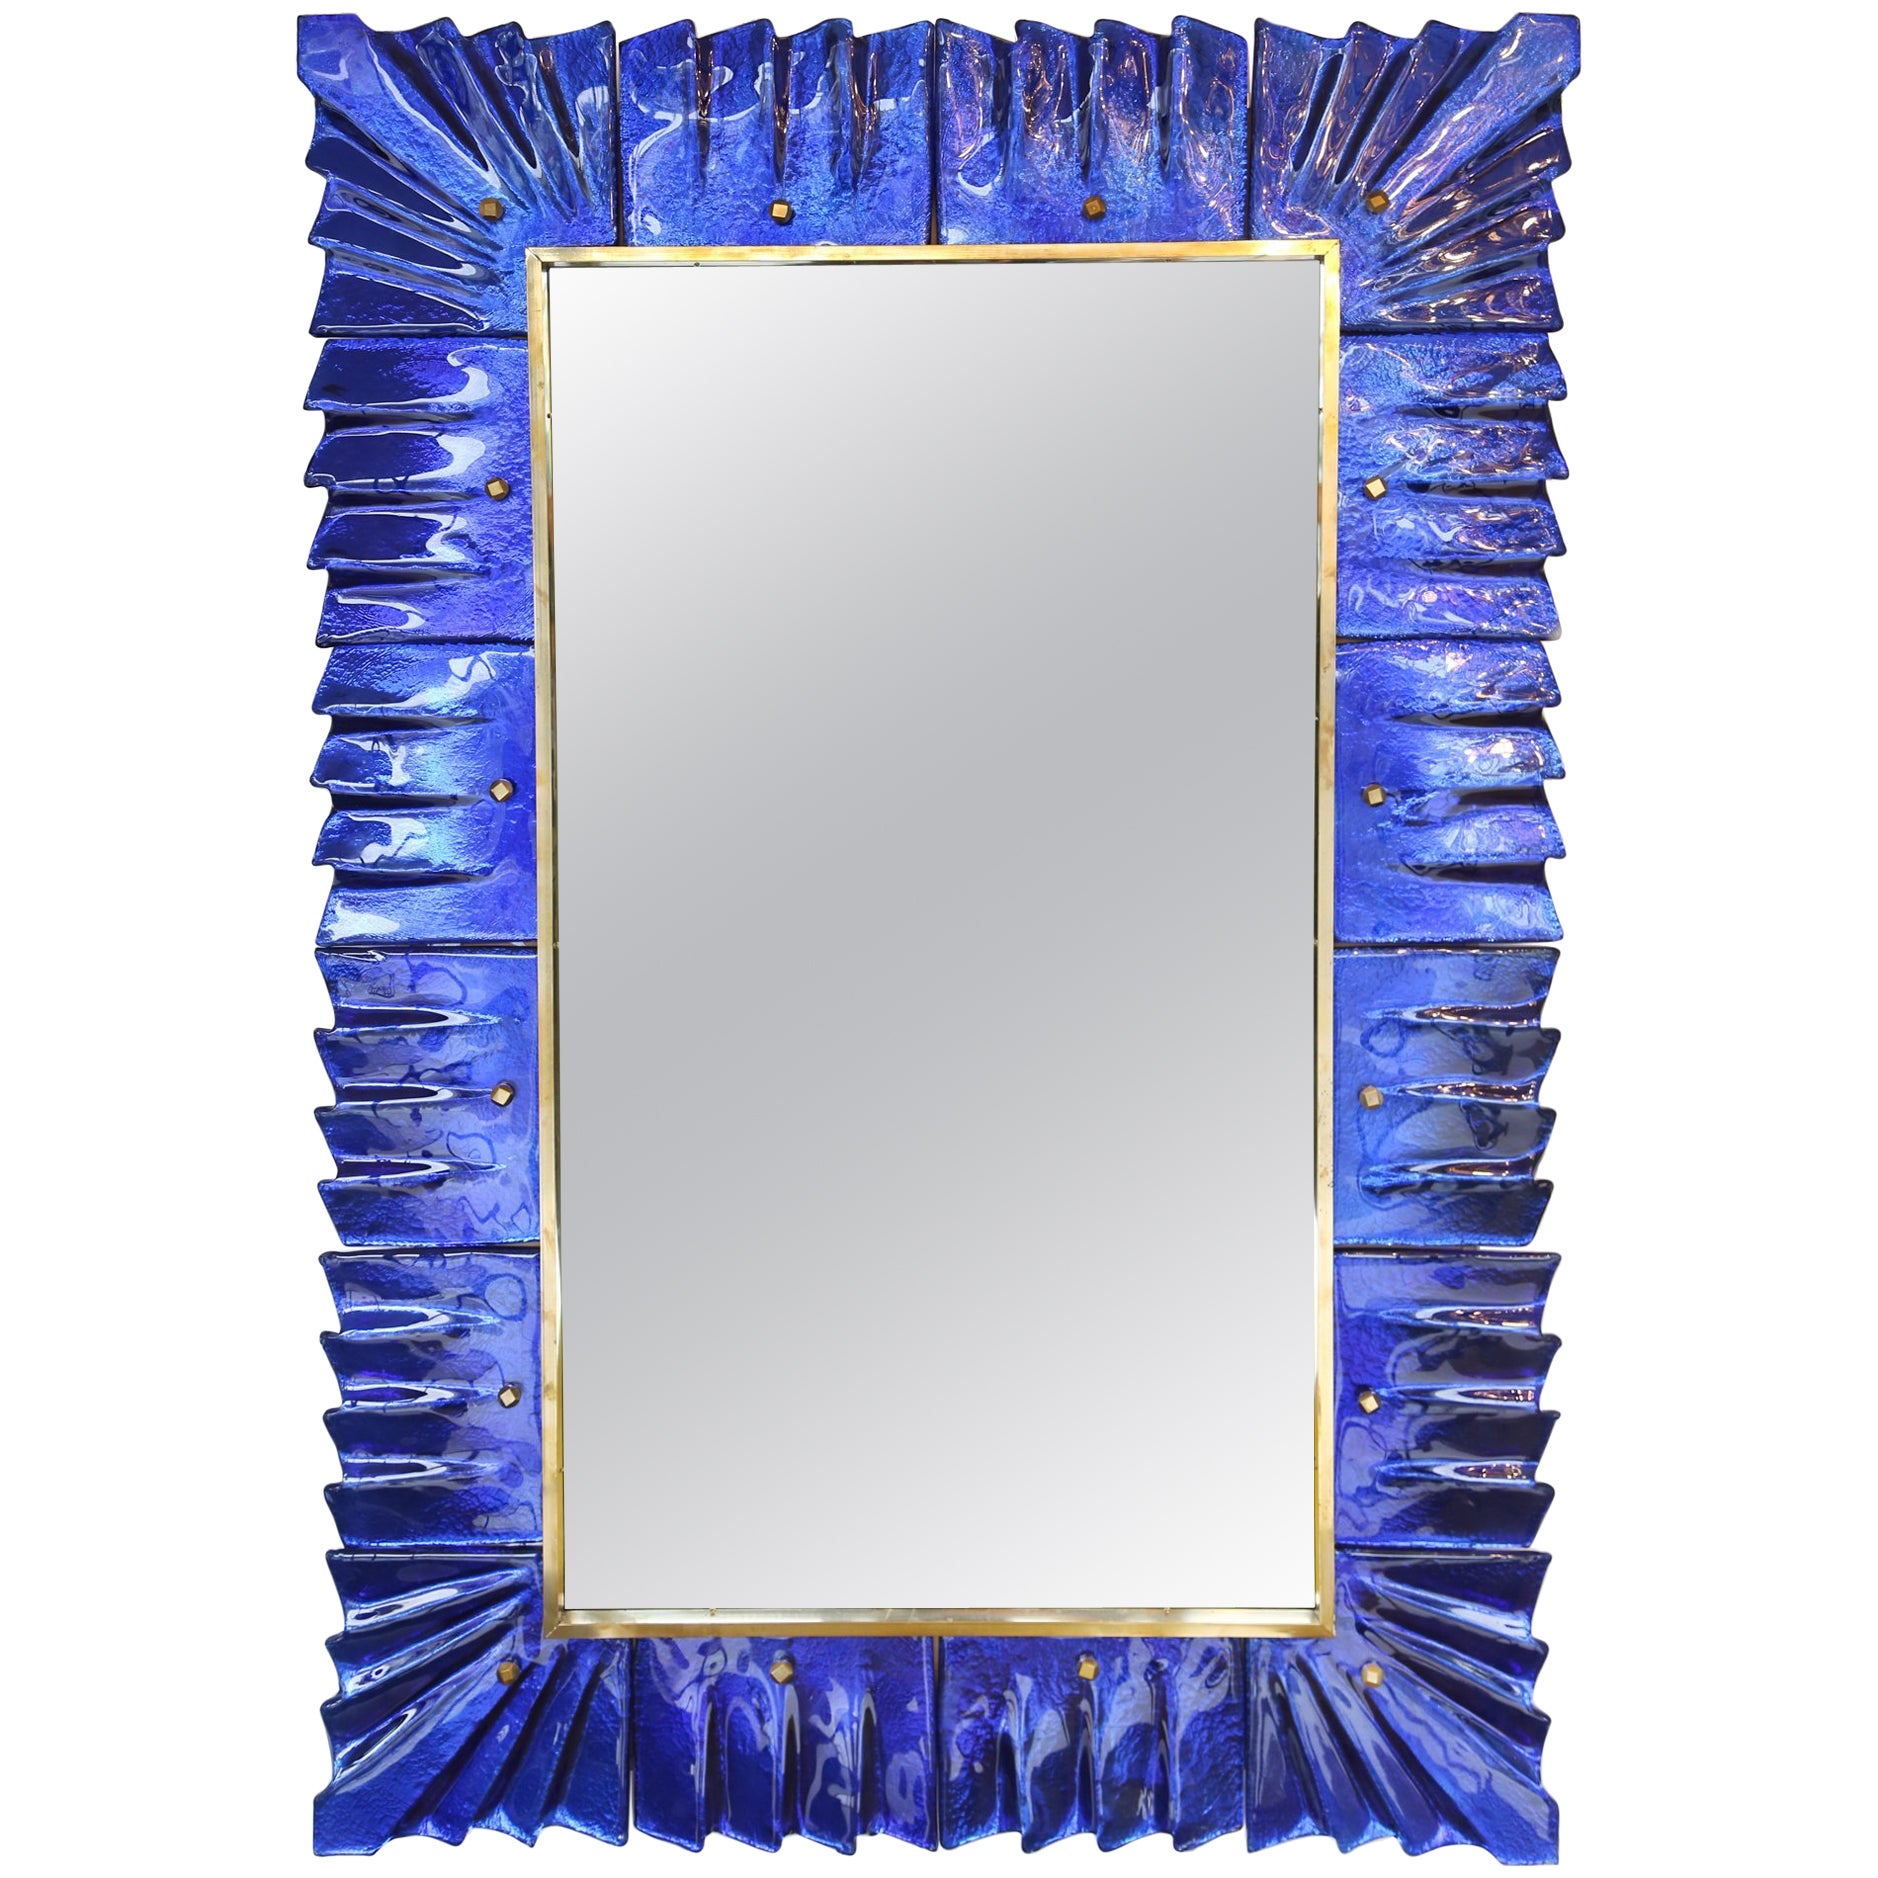 Cobalt Blue Oval Venetian Mirror For Sale At 1stdibs